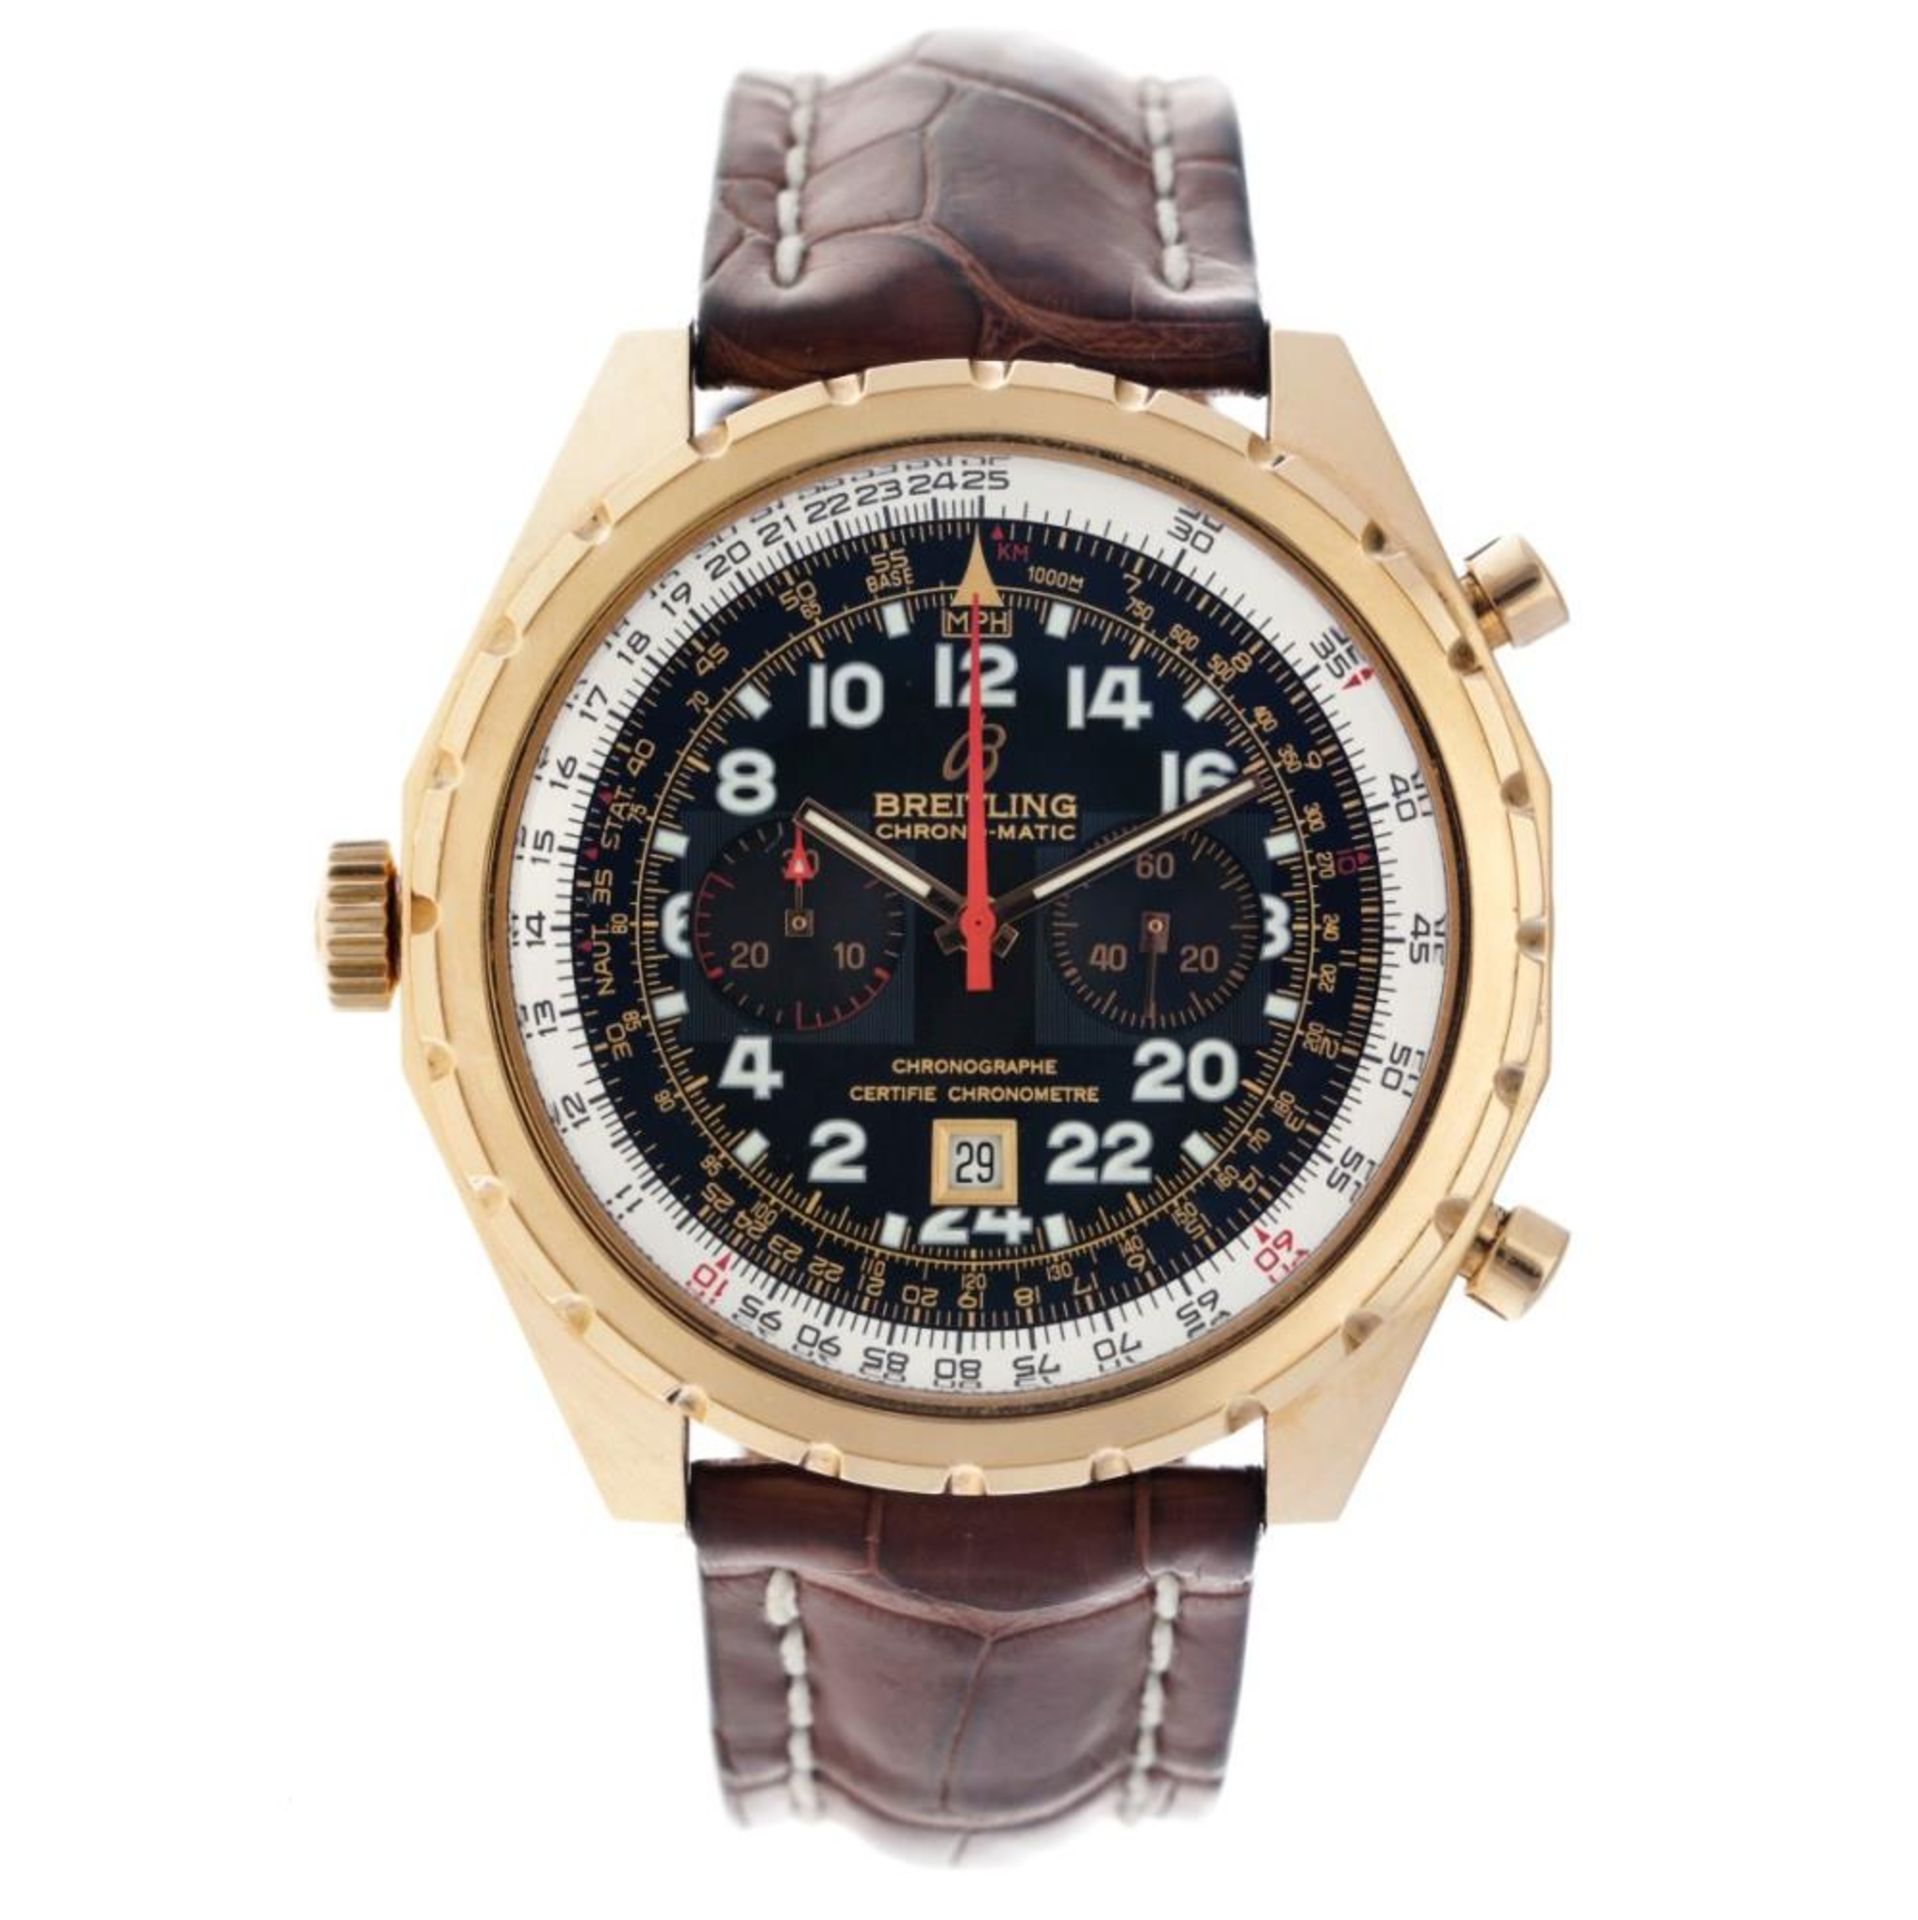 Breitling Chrono-Matic H22360 - Men's watch - 2006.